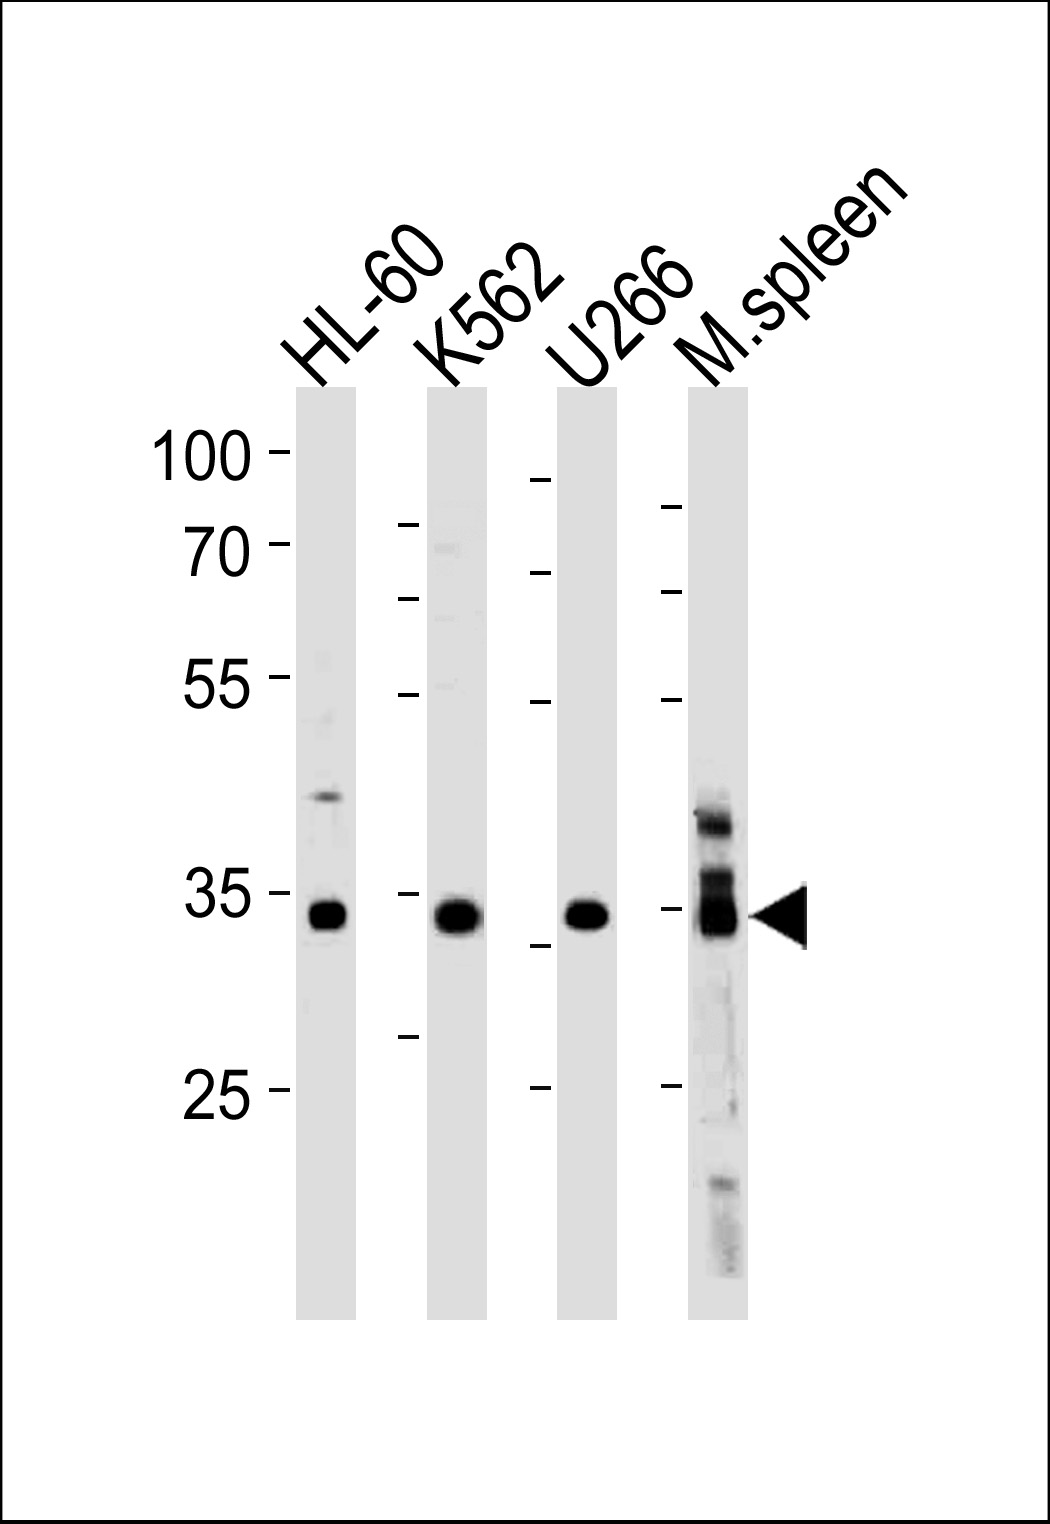 GFI1B Antibody (C-term) (Cat. #AP20437b) western blot analysis in HL-60,K562,U266 cell line and mouse spleen lysates (35ug/lane).This demonstrates the GFI1B antibody detected the GFI1B protein (arrow).